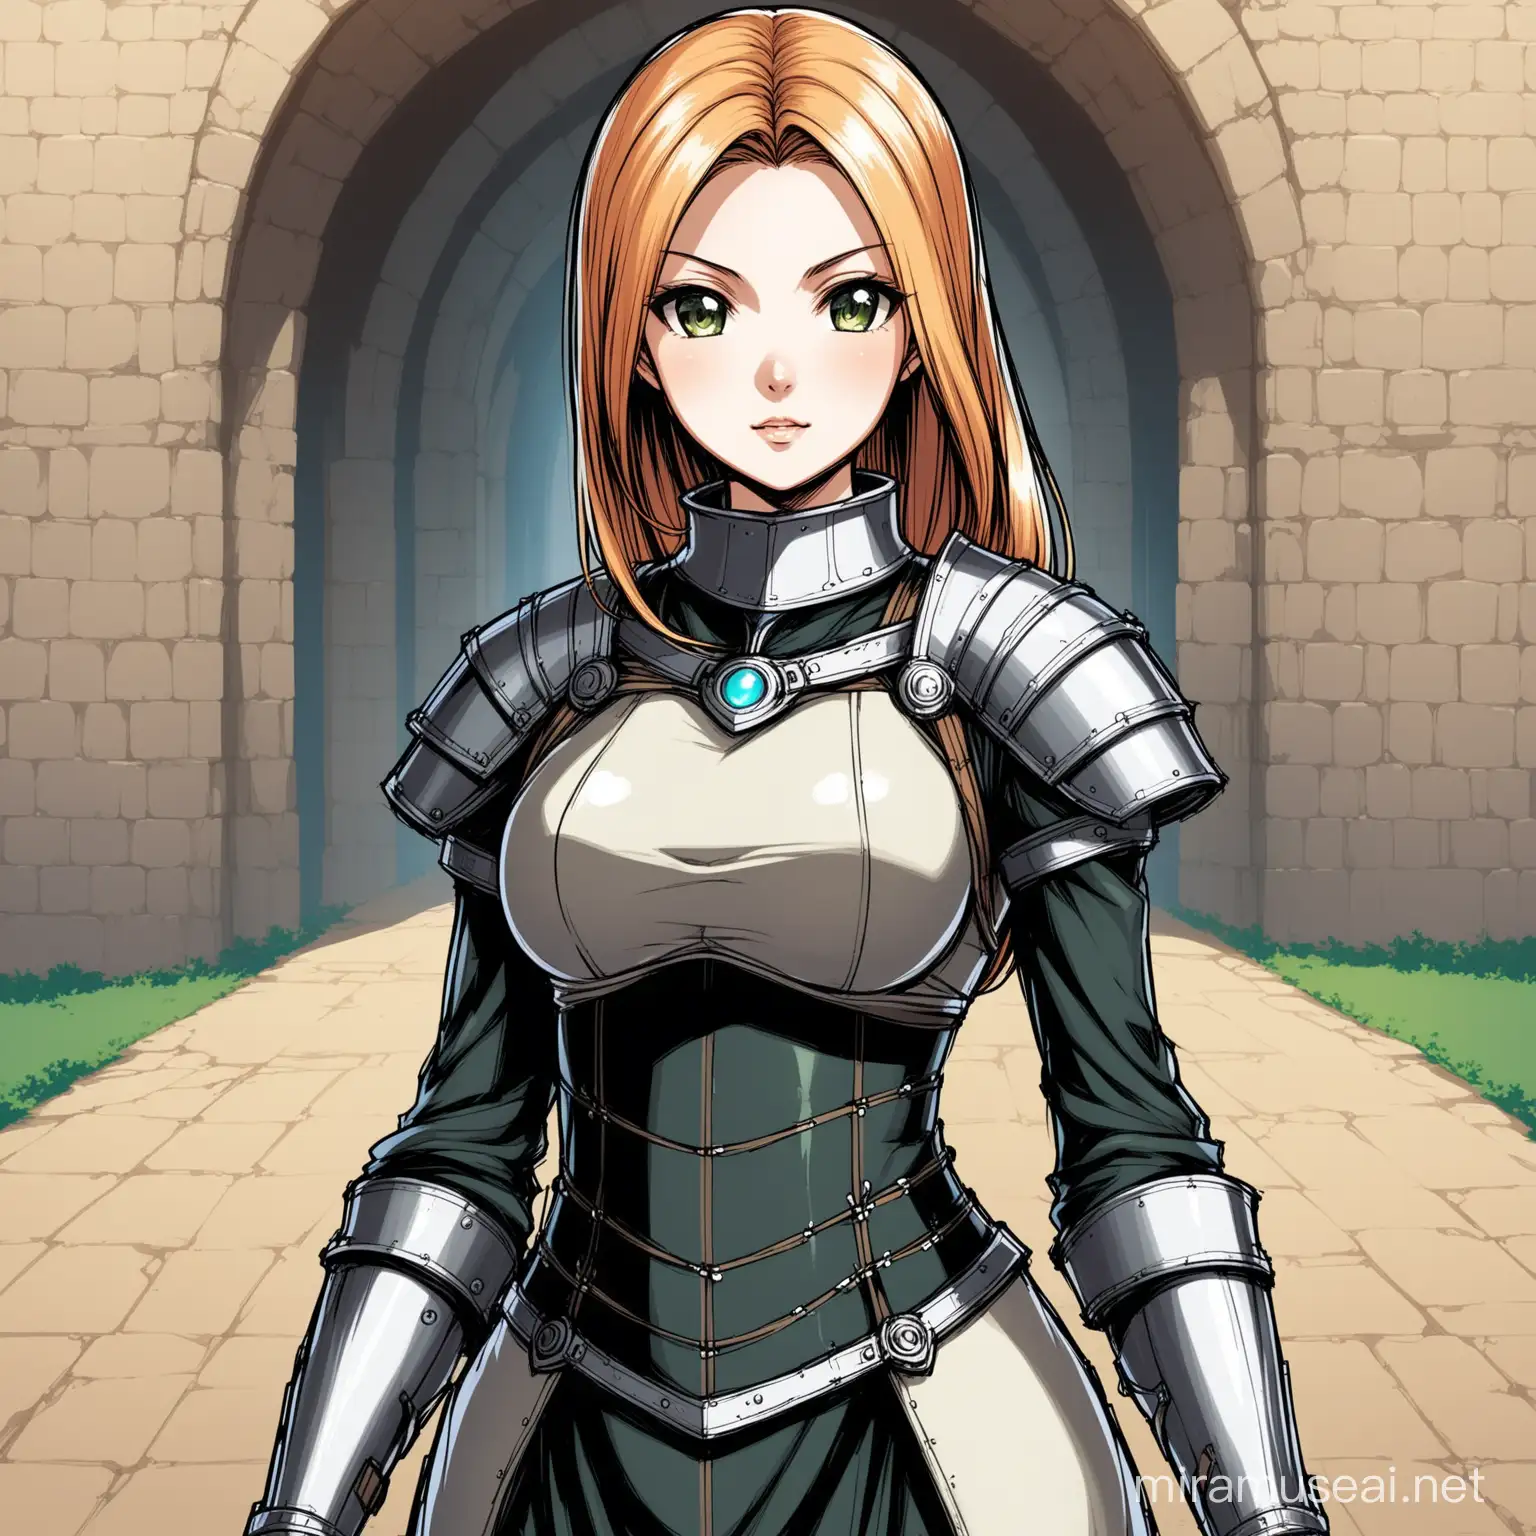 Futuristic Medieval Manga Woman in Hybrid Attire